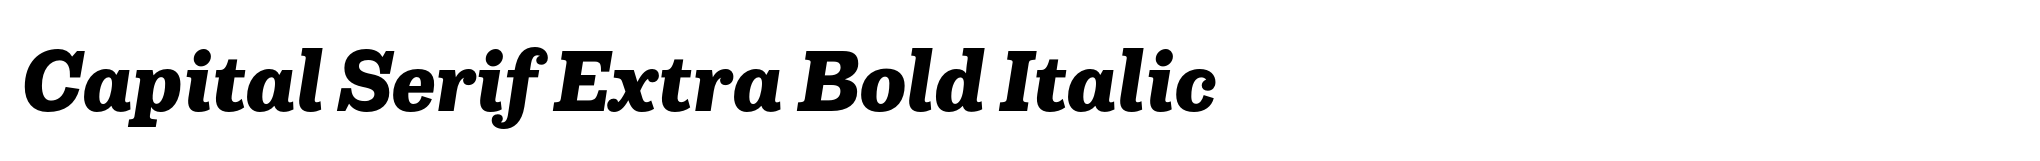 Capital Serif Extra Bold Italic image